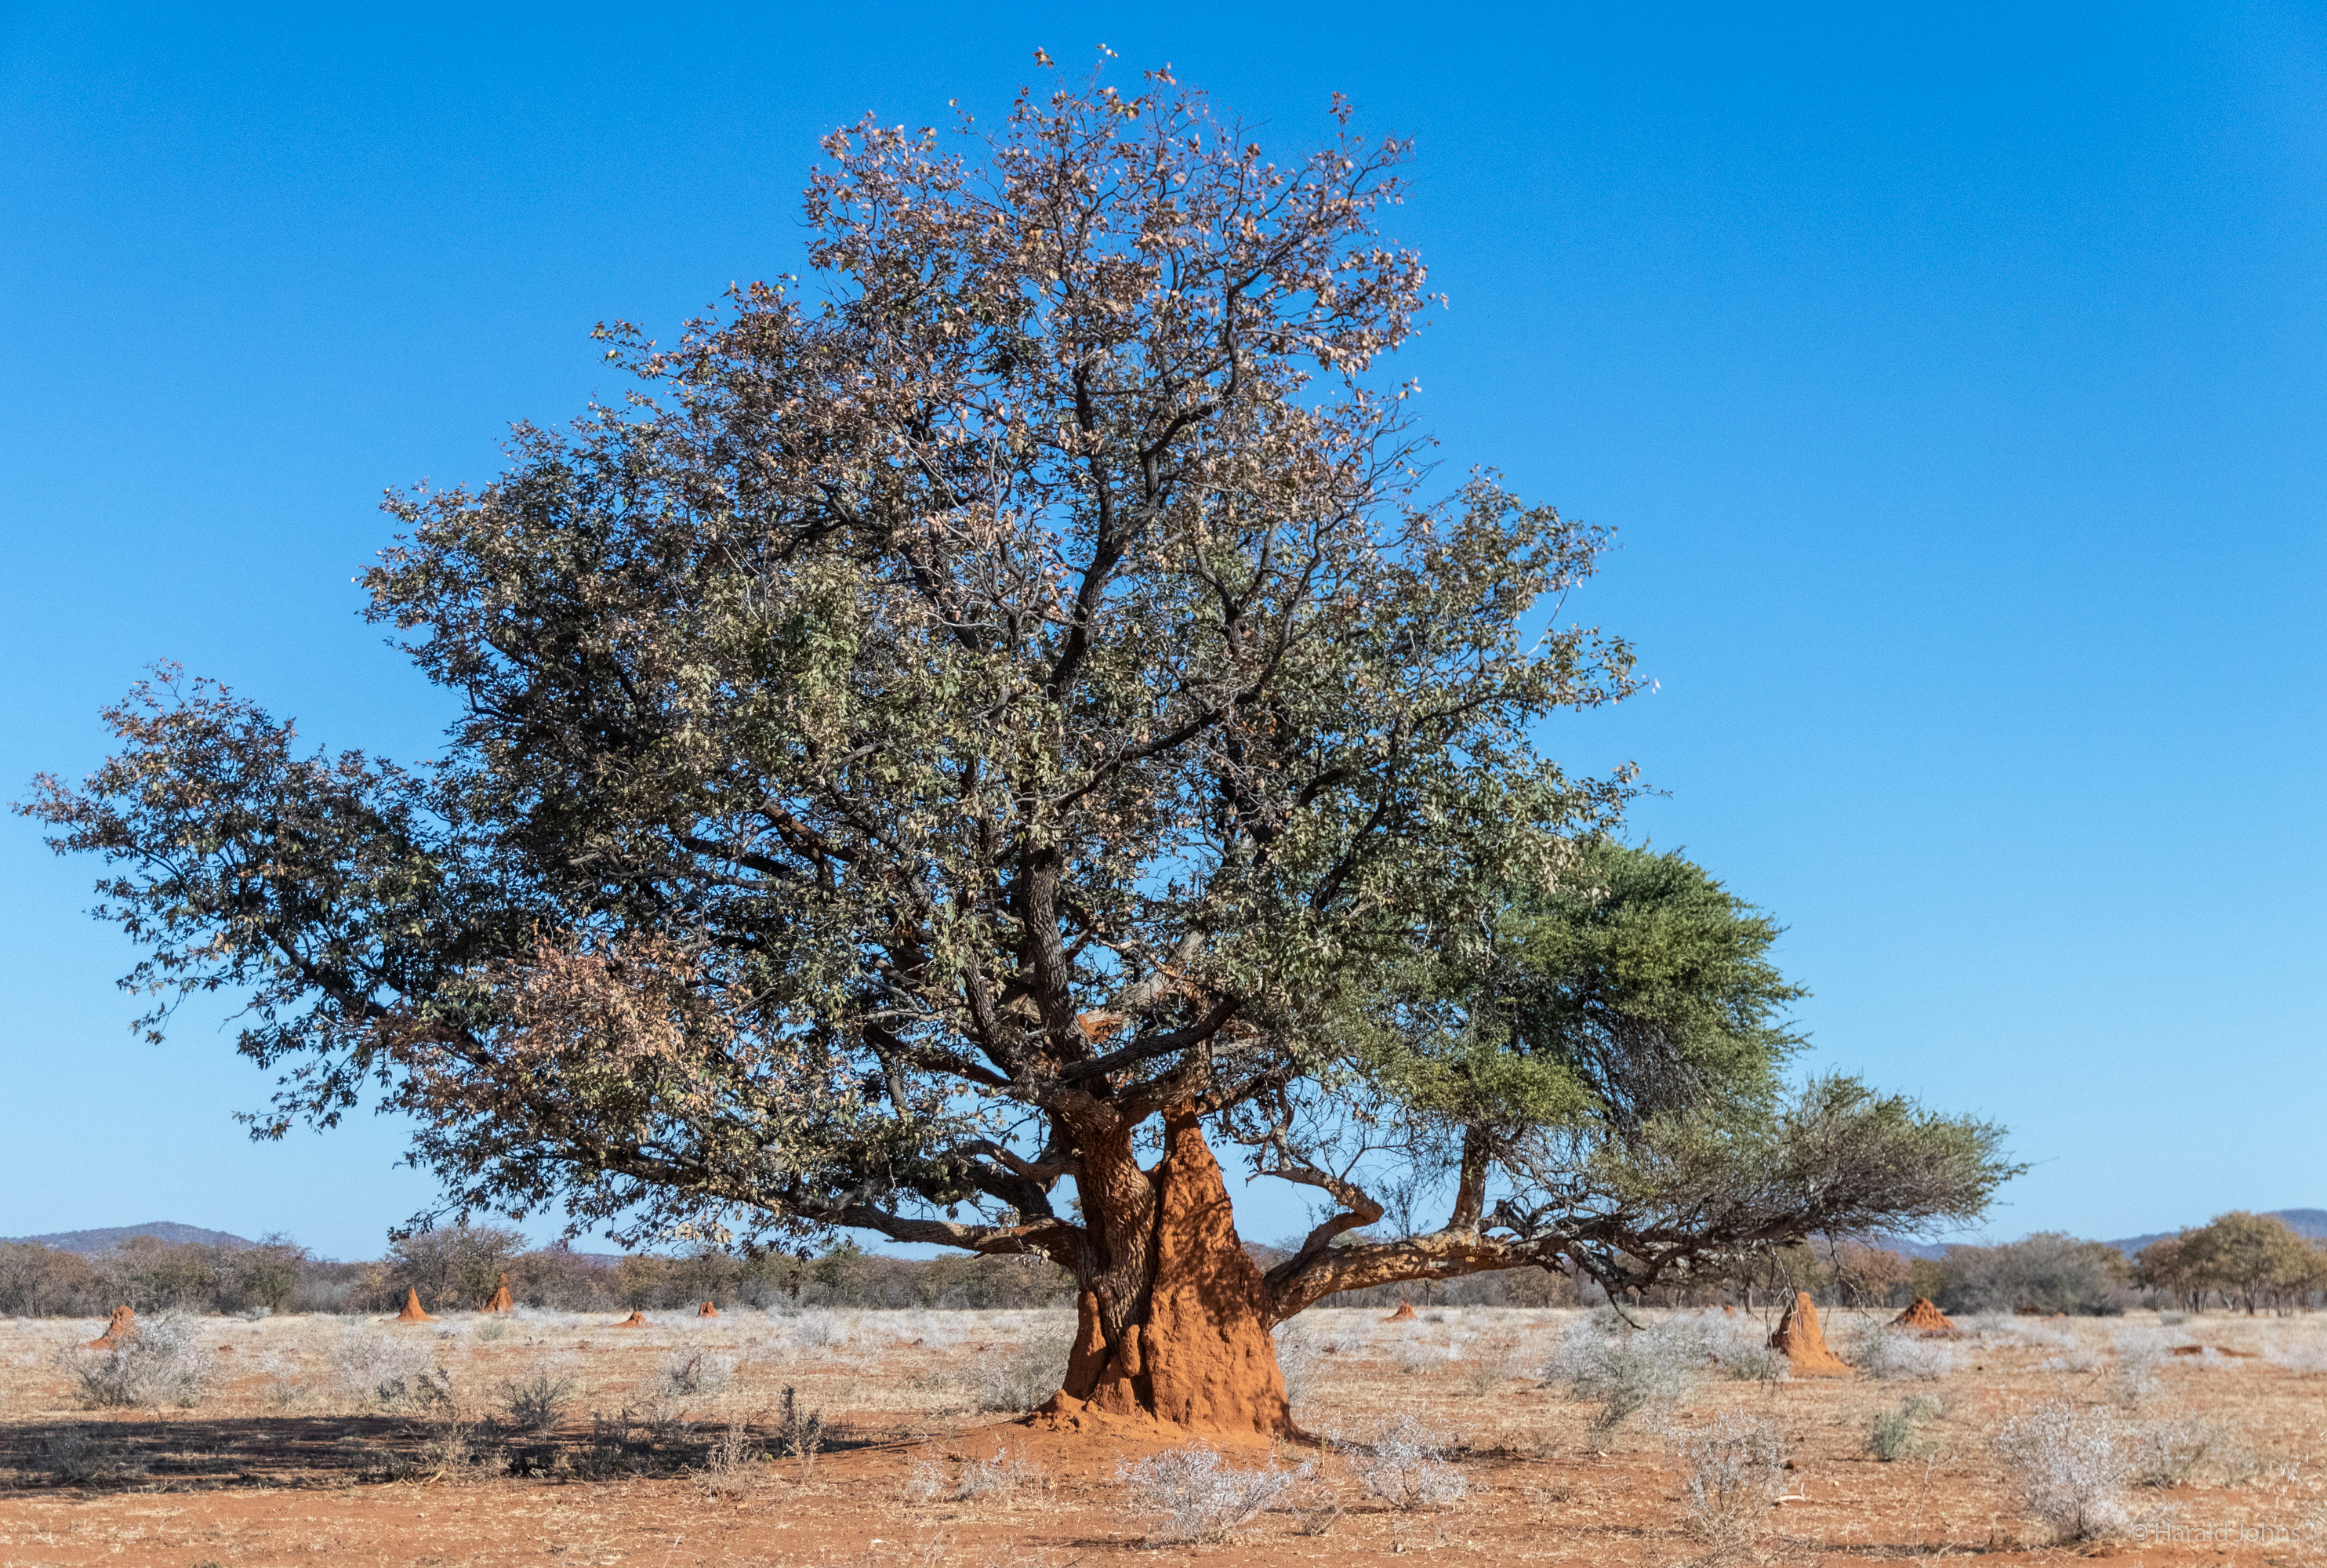 Termitenhügel am Baum